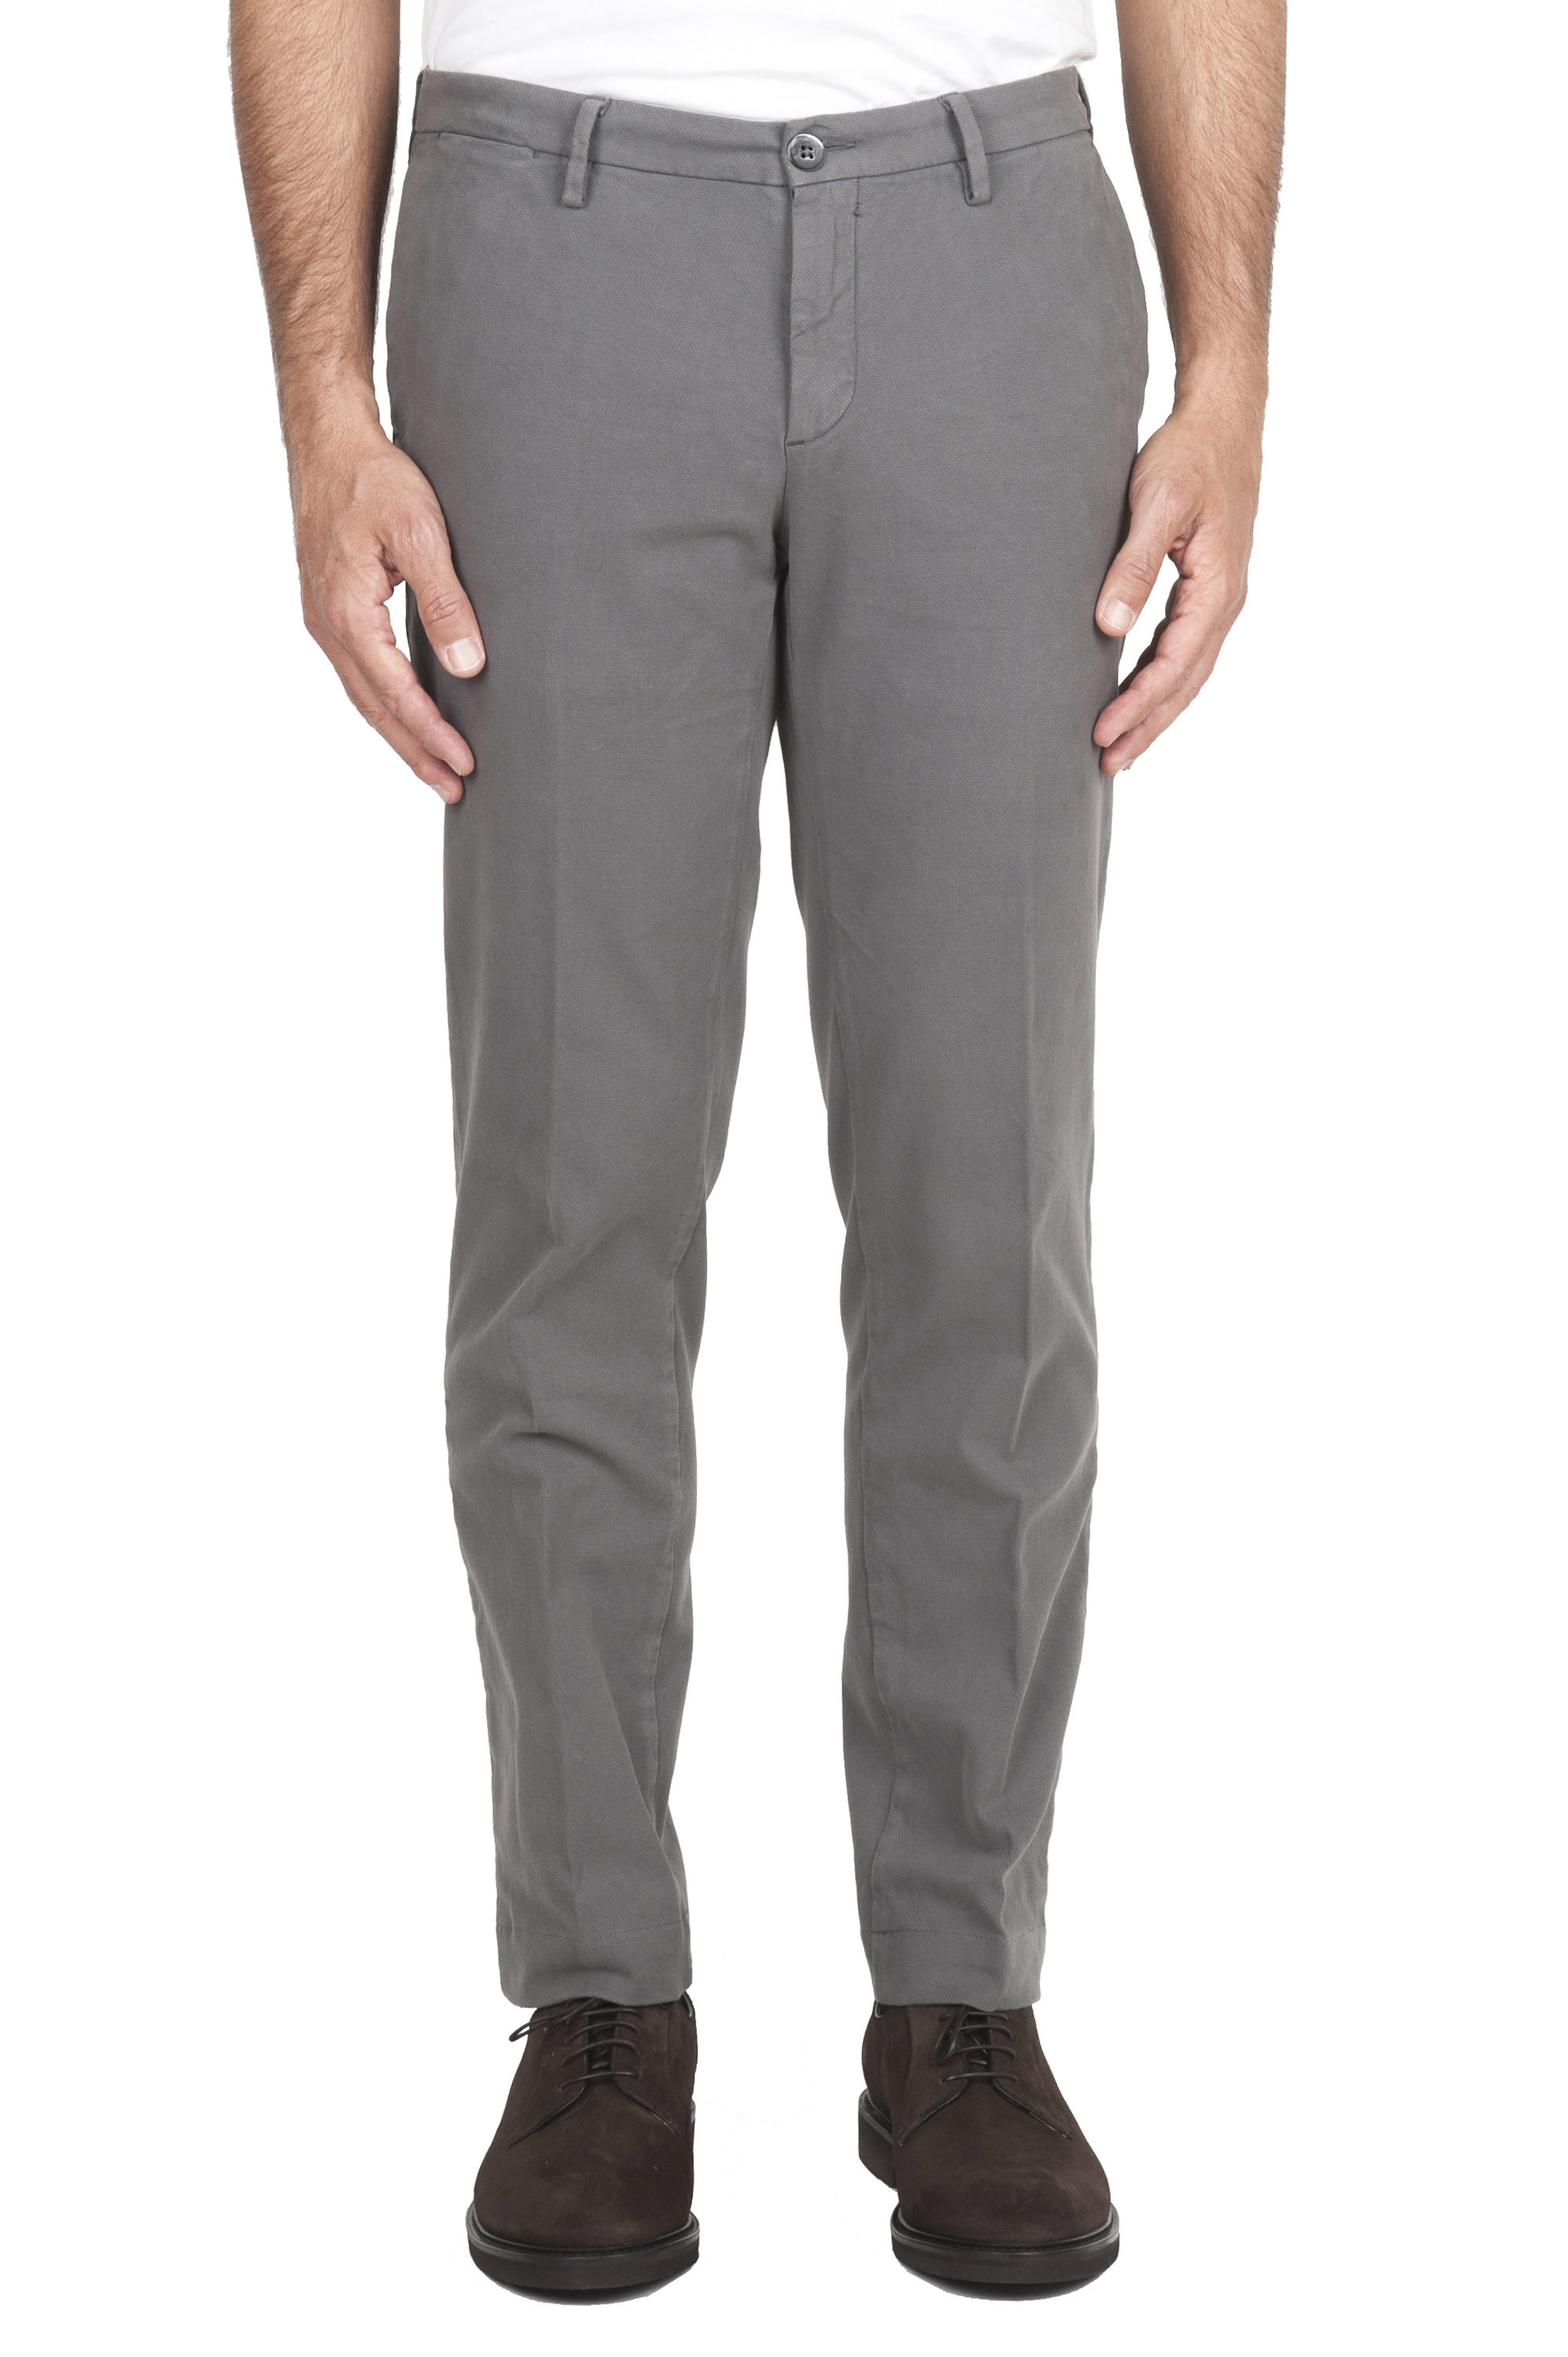 SBU 02927_2020AW Pantalon chino classique en coton stretch gris clair 01